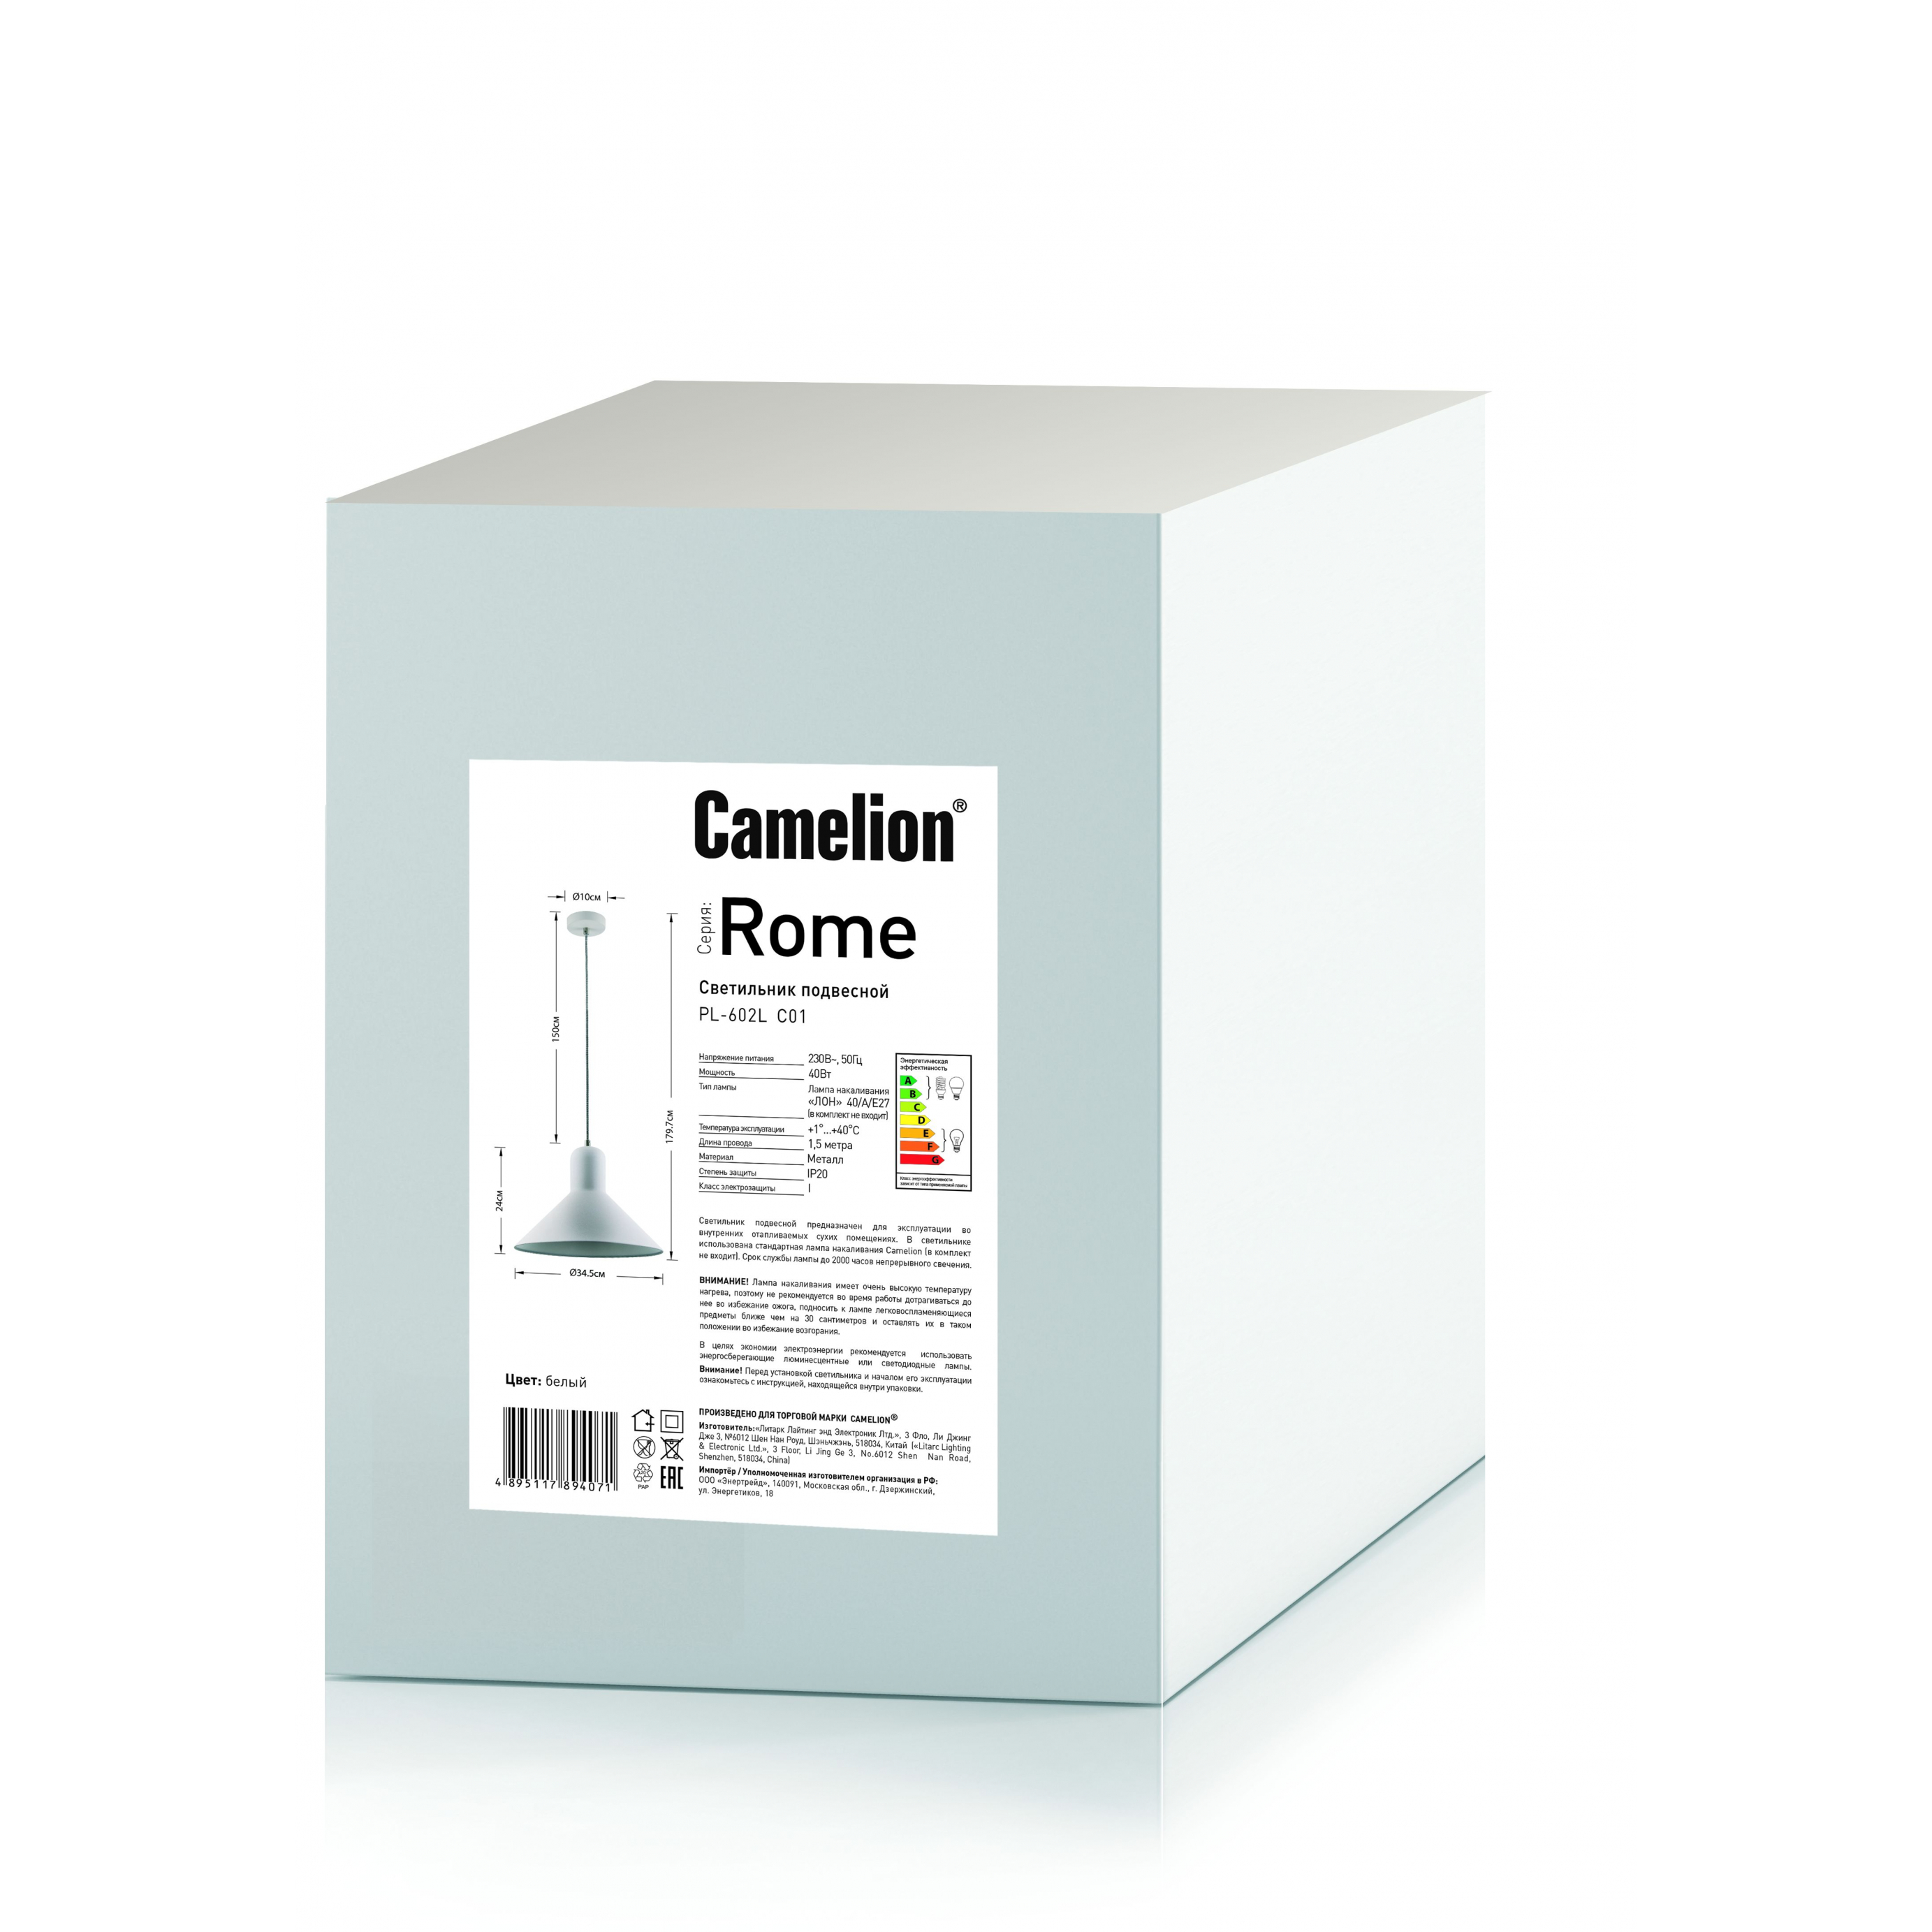 Camelion PL-602L C01 белый (Светильник подвесной Rome, 1х E27, 40Вт, 230